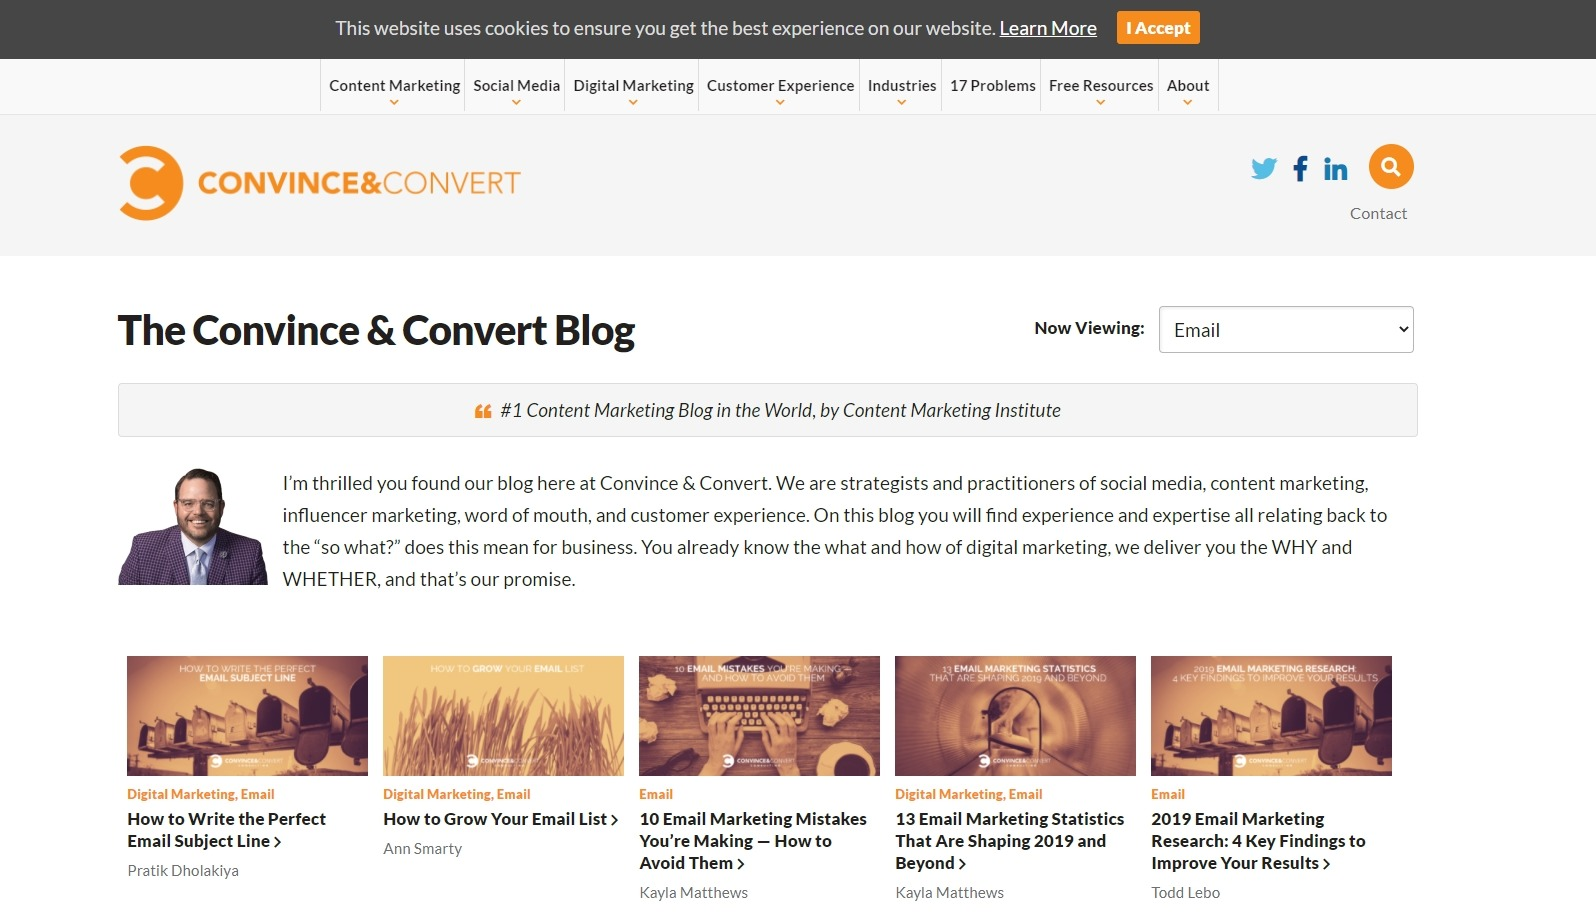 The Convince & Convert Blog